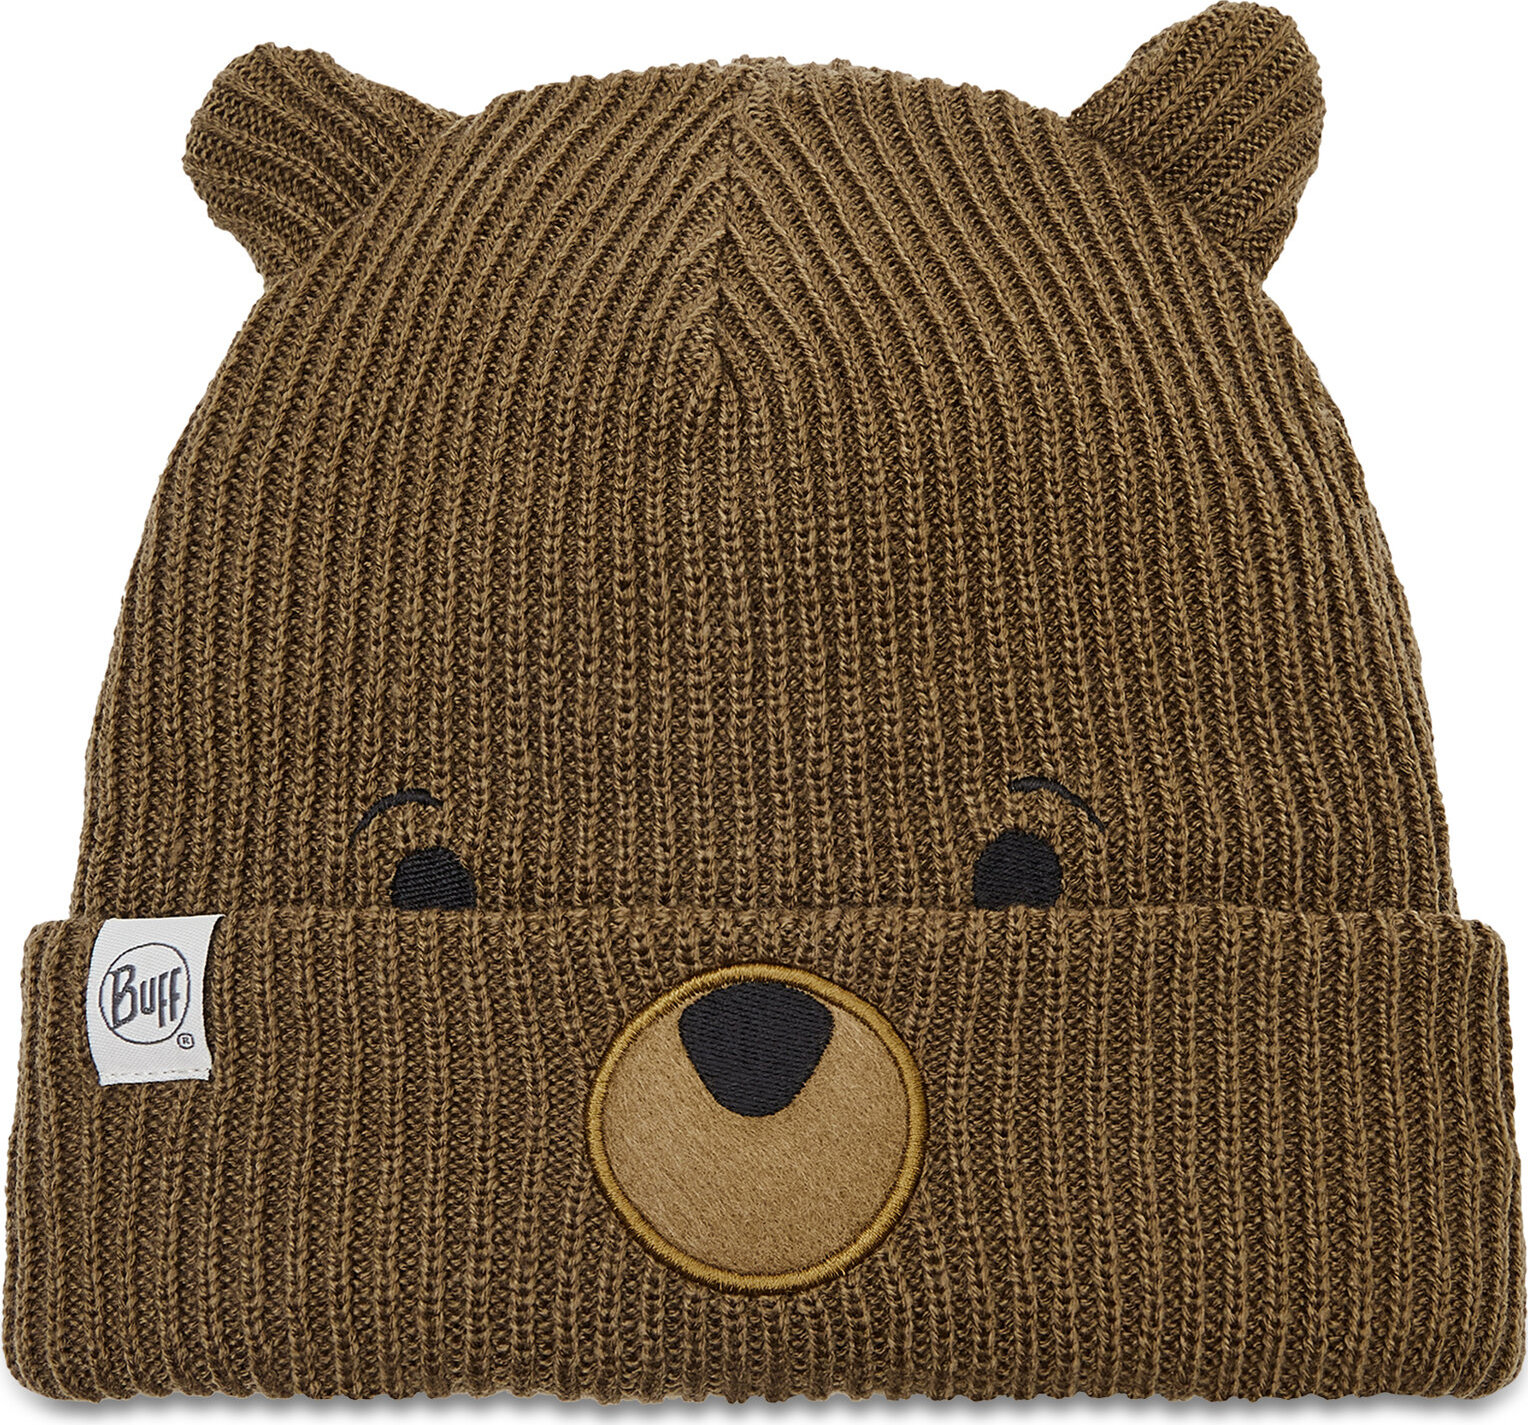 Čepice Buff Knitted Hat Funn Bear 120867.311.10.00 Fossil